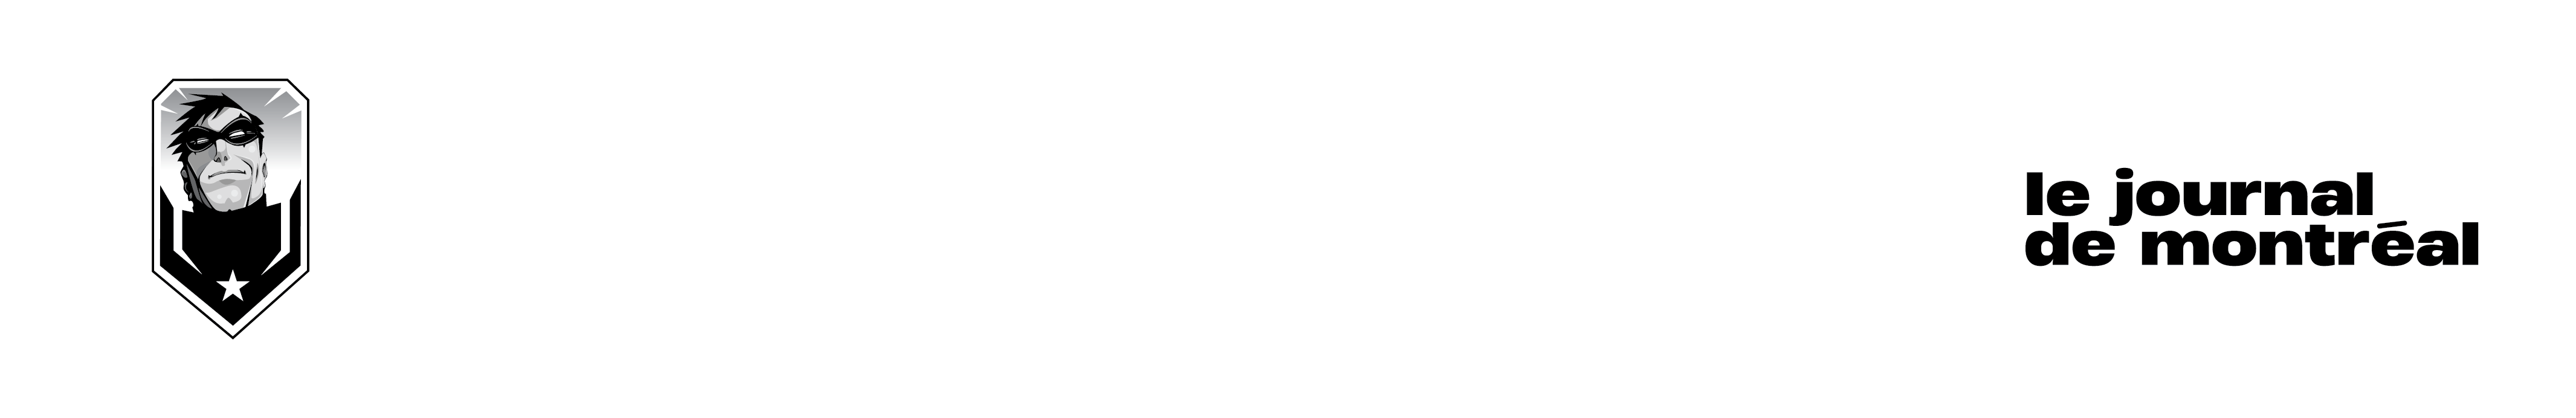 Comiccon de Montréal 2018 Exhibitor Order Form - PCM - FRE - Comiccon de Montréal